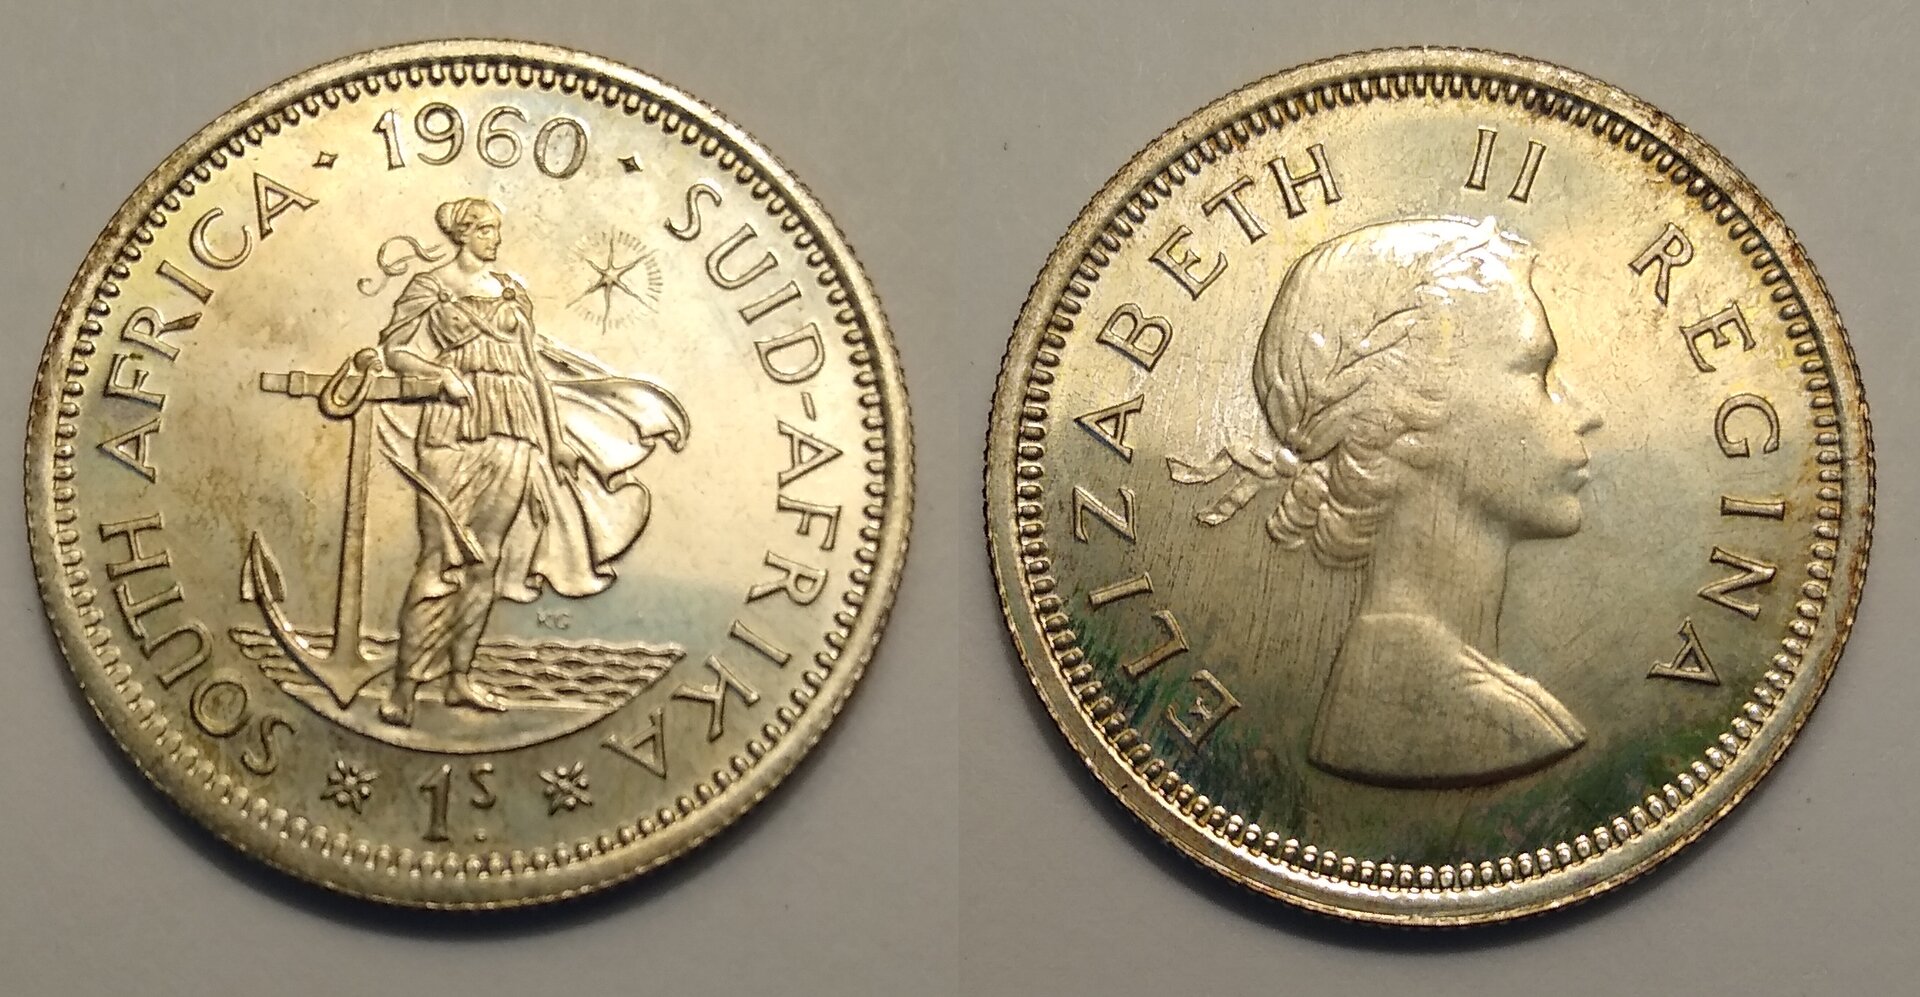 1960 south africa 1 shilling.jpg